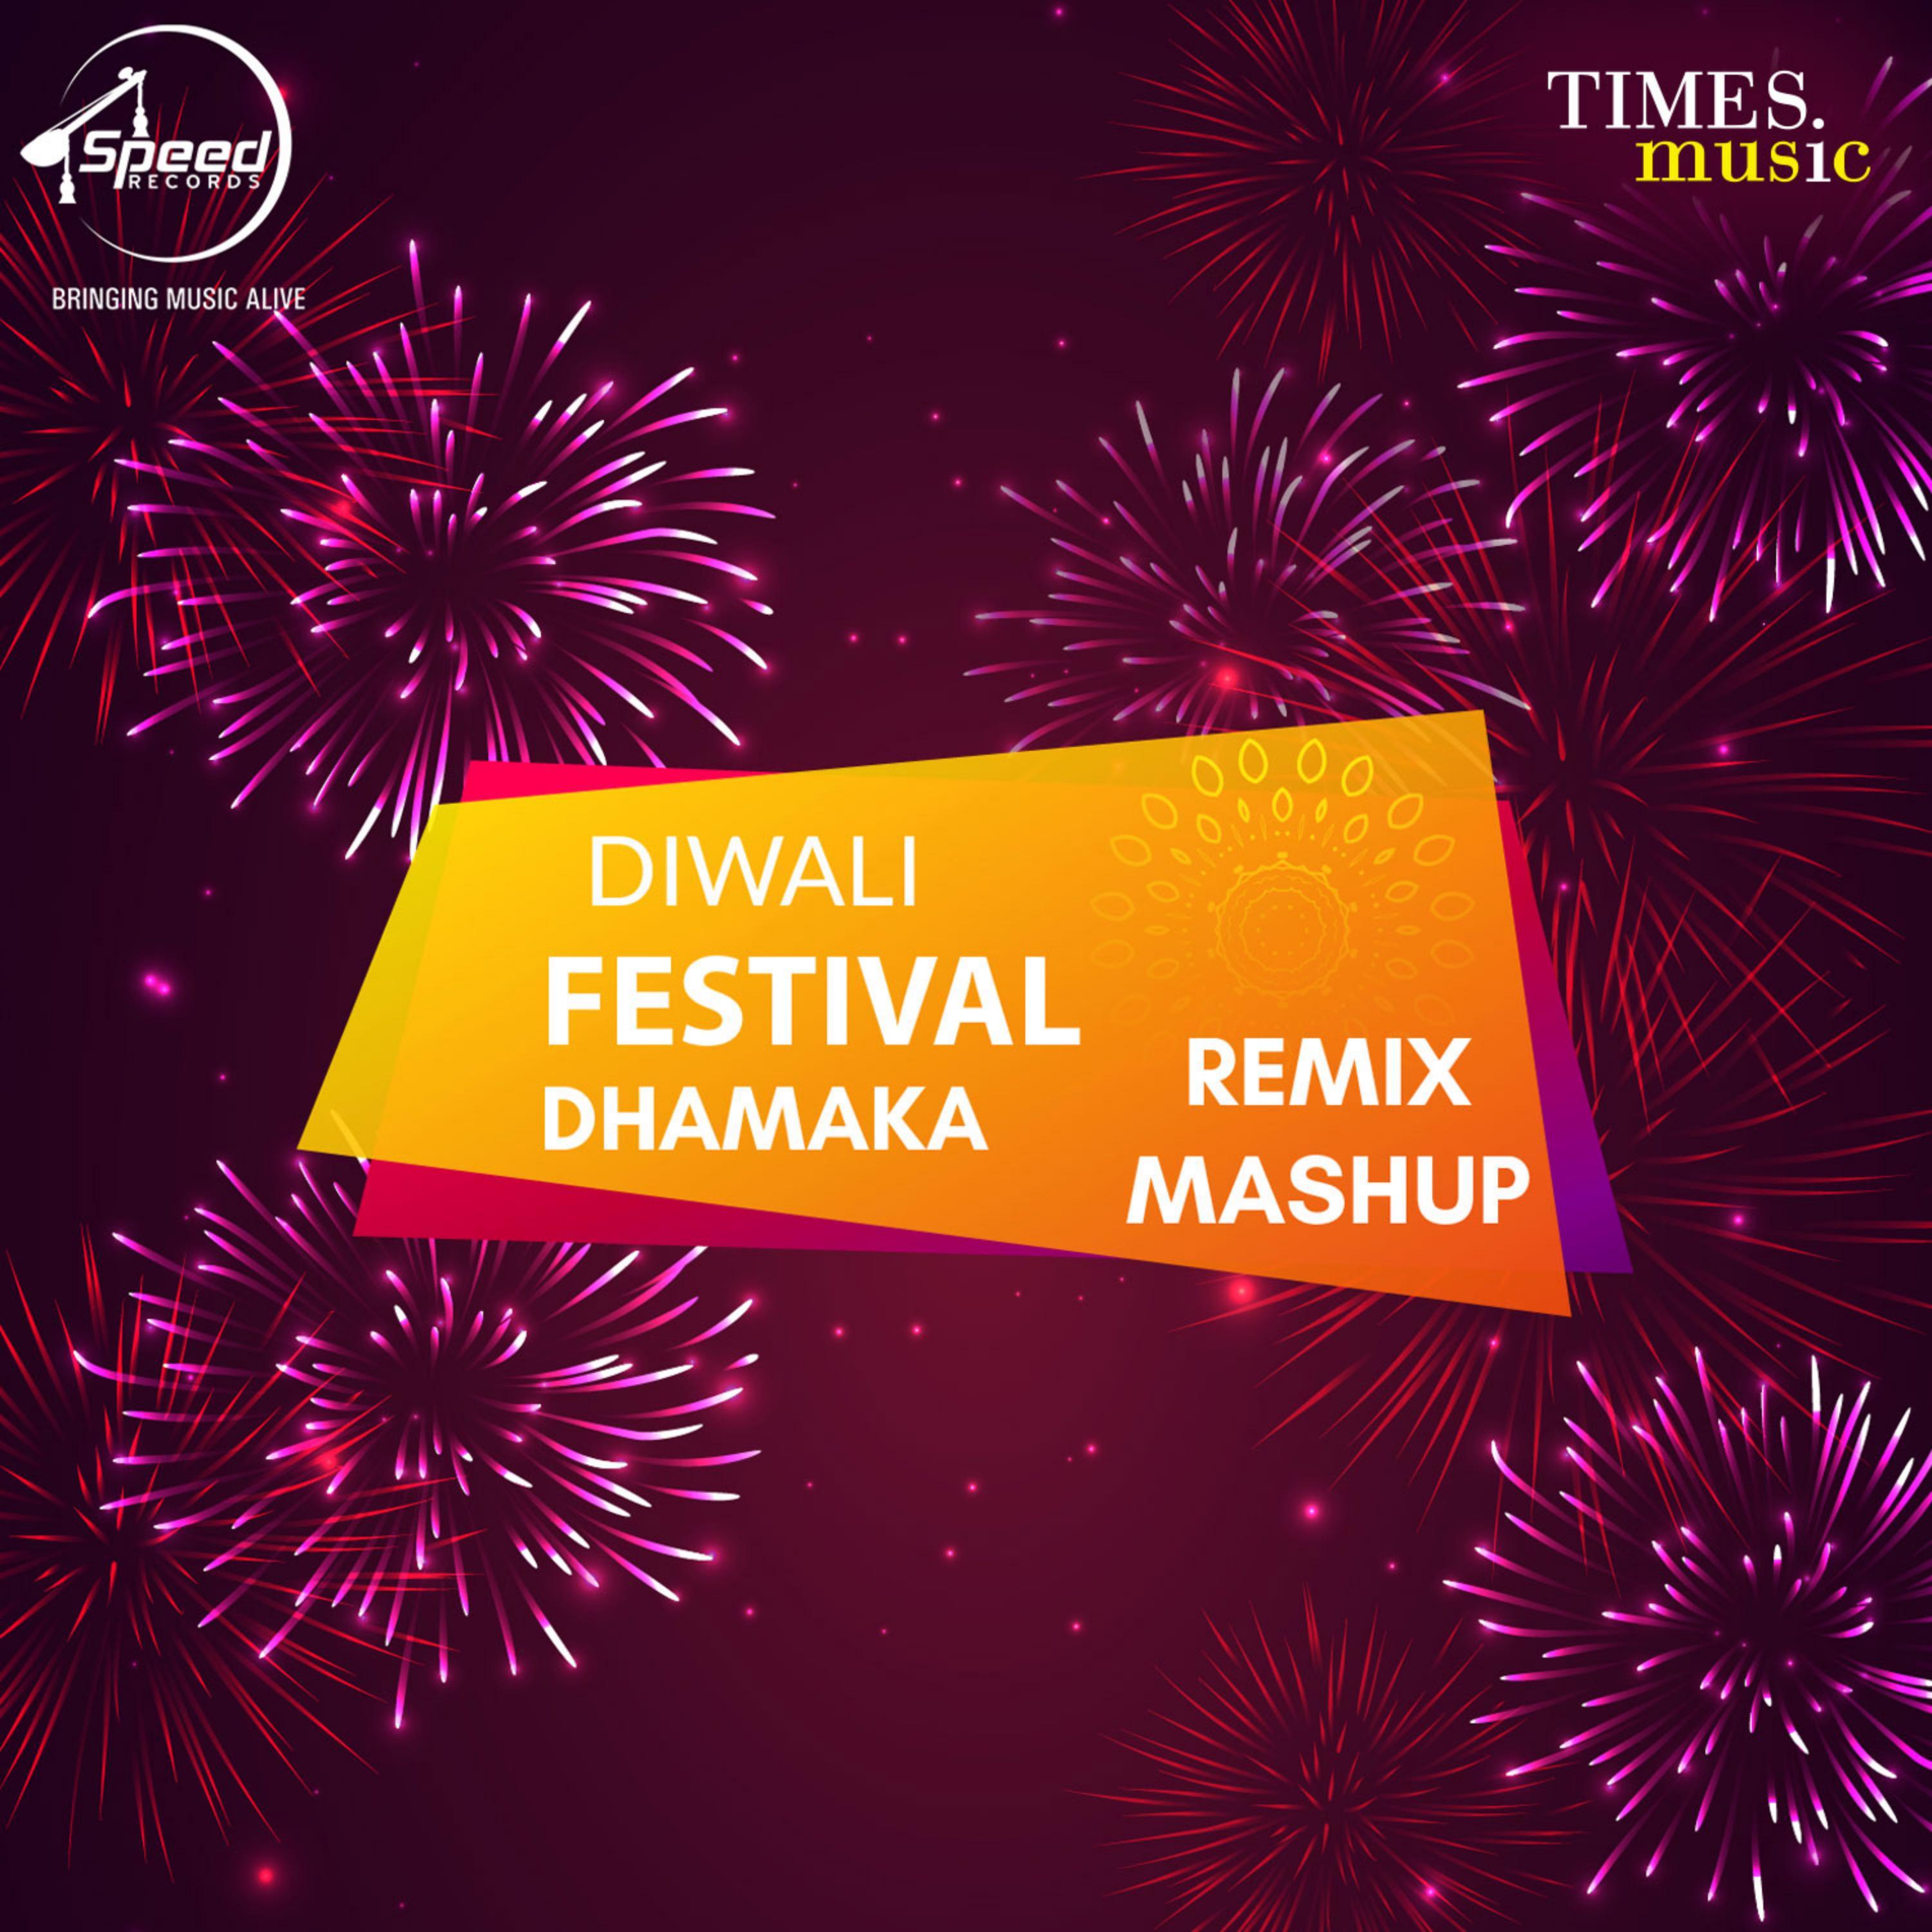 Diwali Festival Dhamaka (Remix)